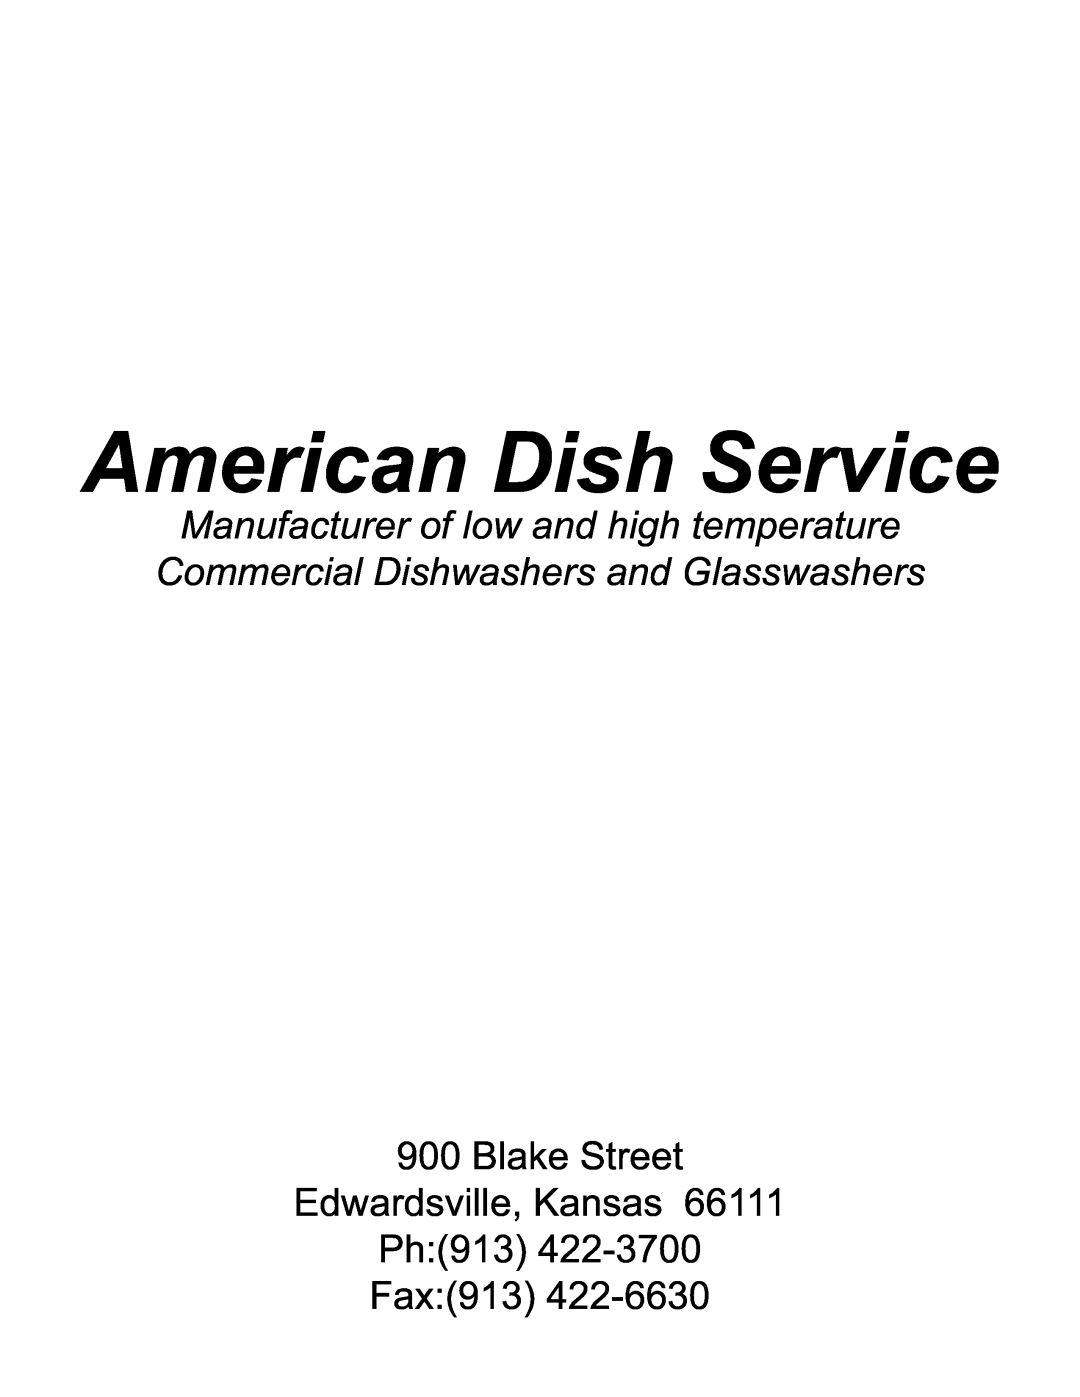 American Dish Service 5-AG-S manual American Dish Service, Blake Street Edwardsville, Kansas Ph, Fax 